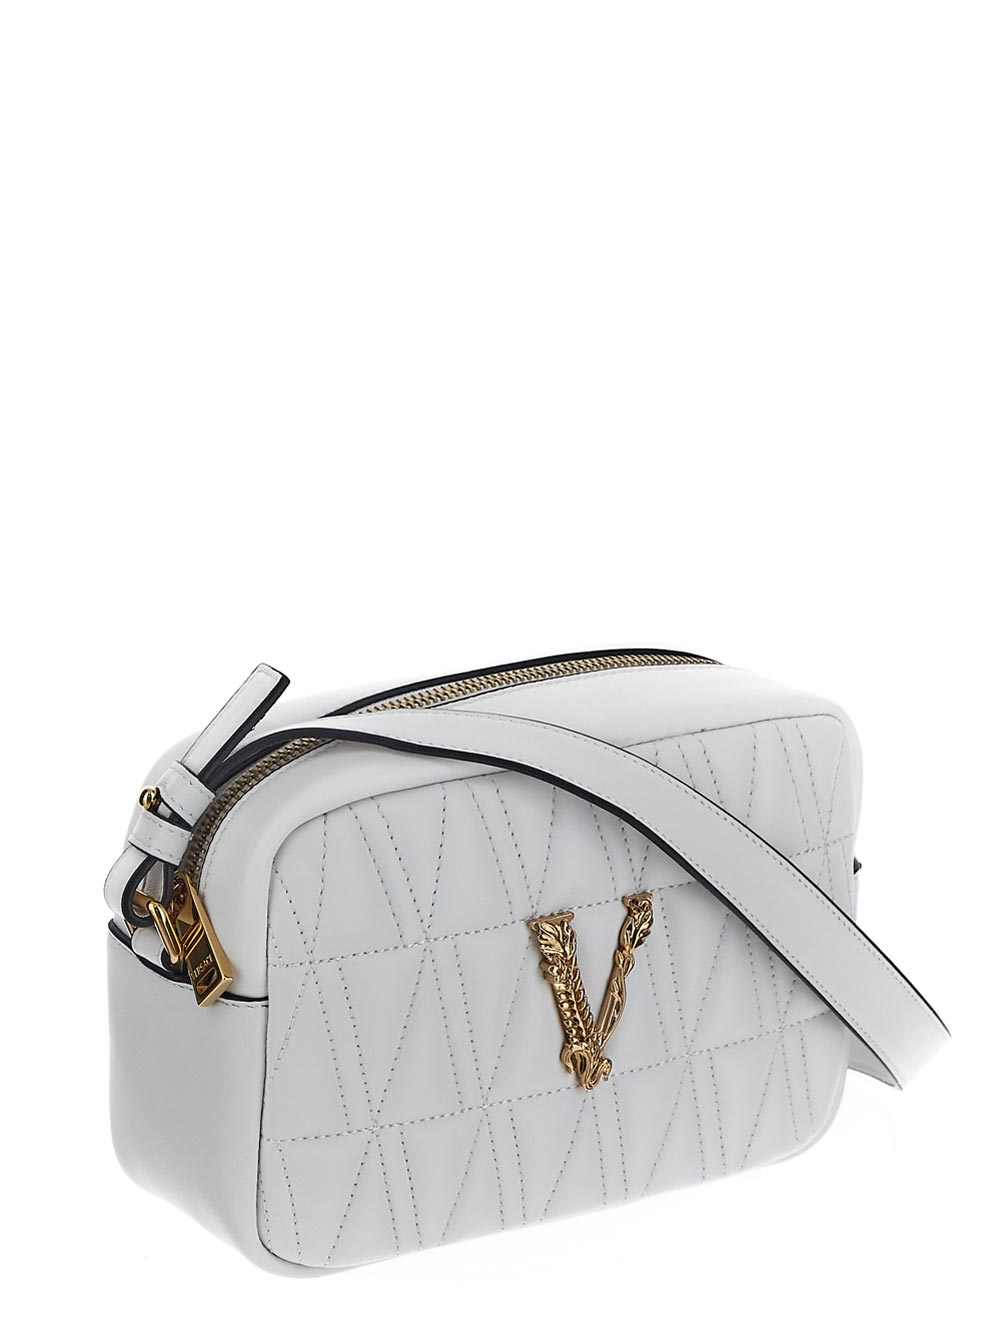 Versace Virtus Leather Crossbody Bag